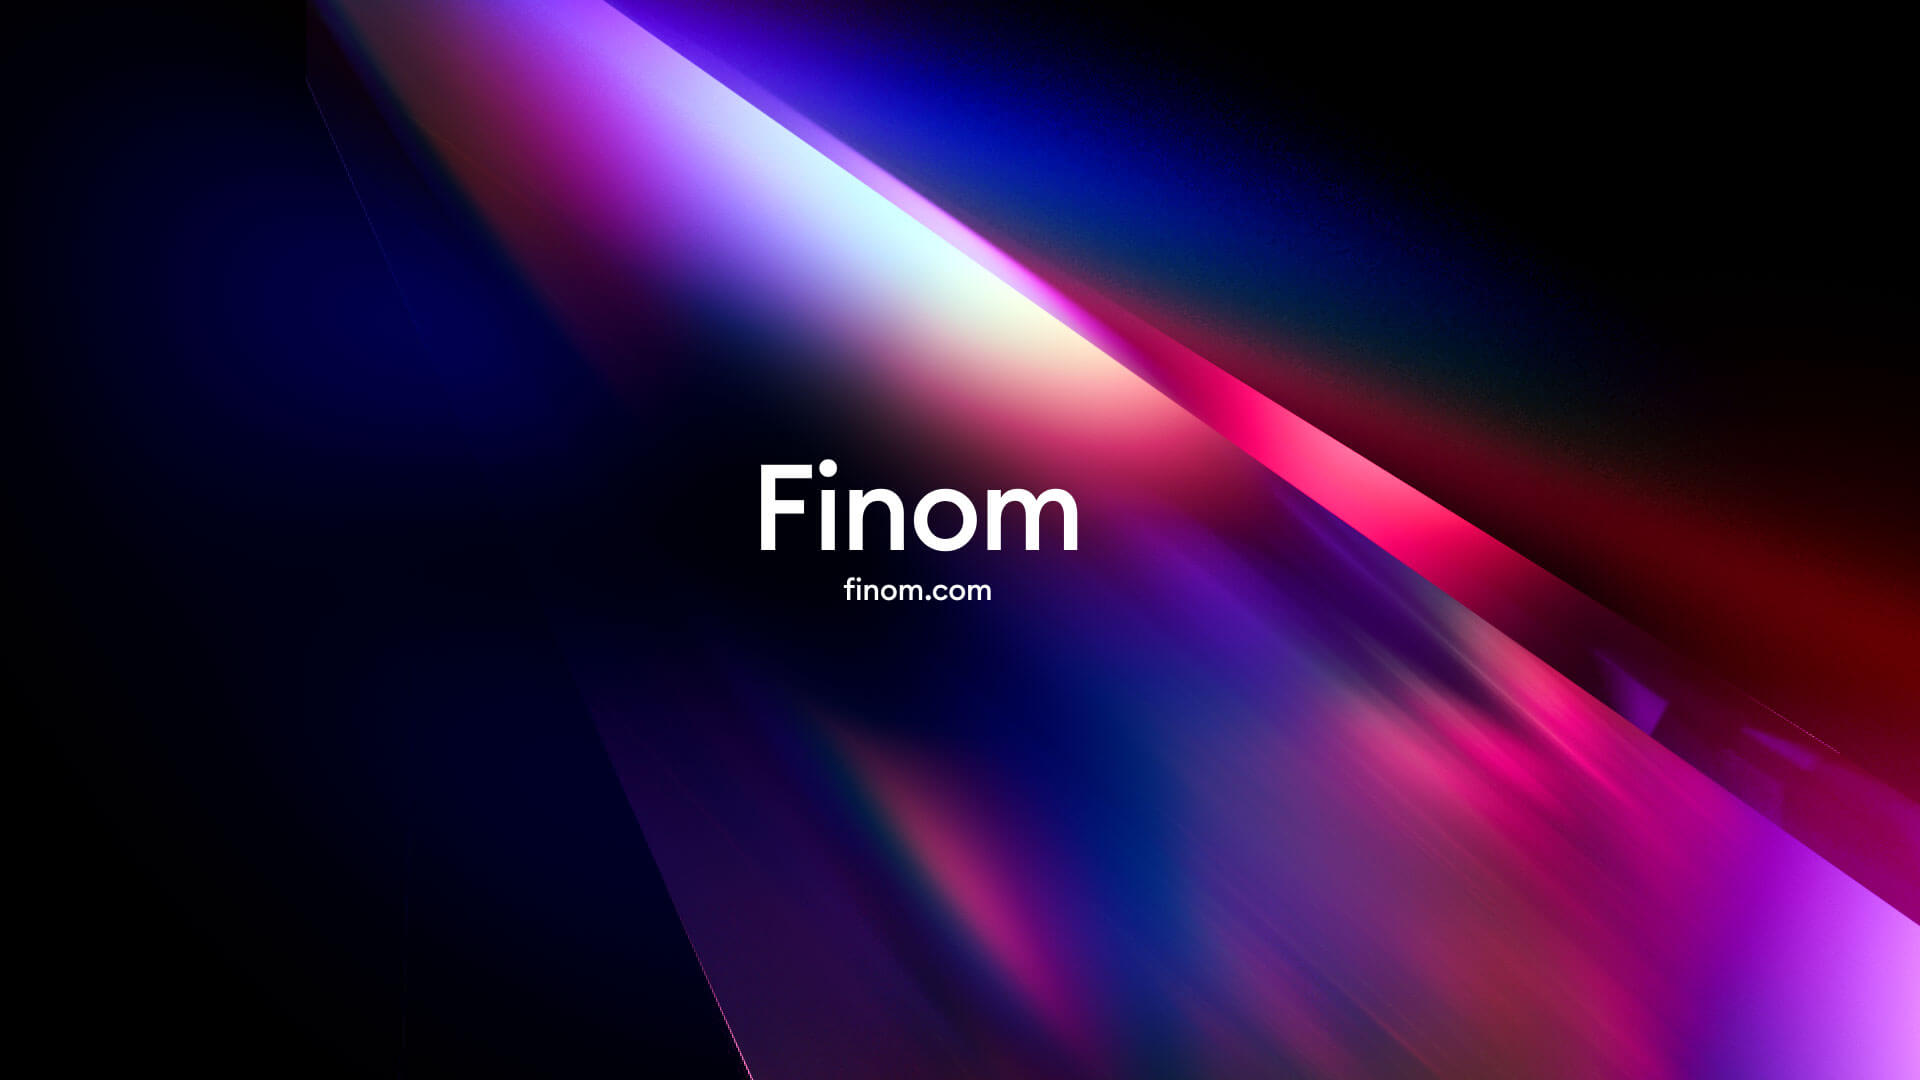 03_Finom-Concept-v03-v003_Clean-A-1